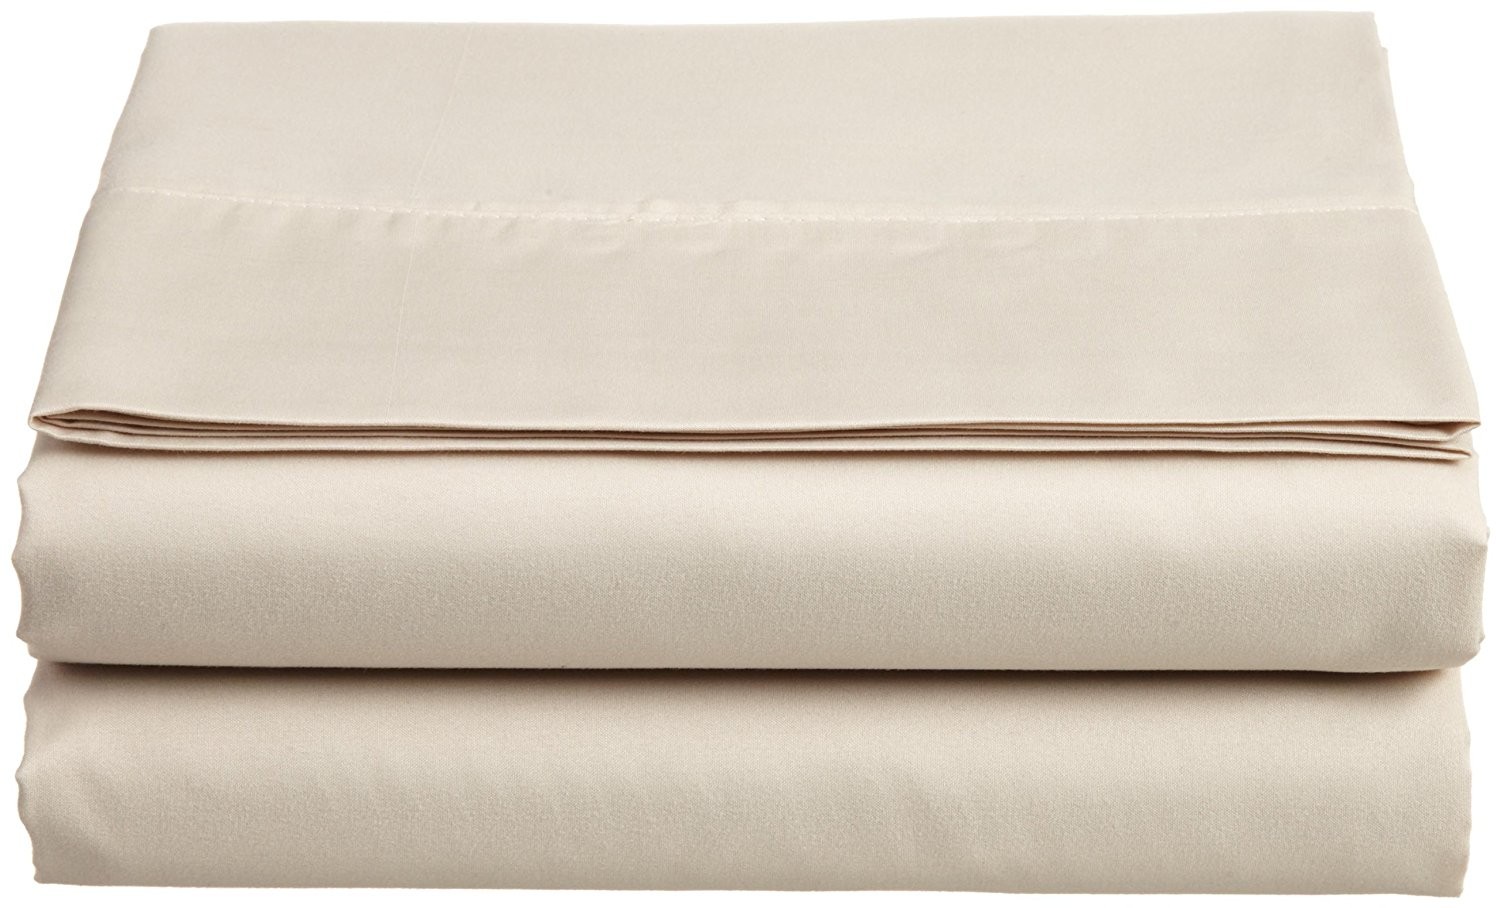 100% Brushed Cotton Flannelette Pillowcase Pair Stone